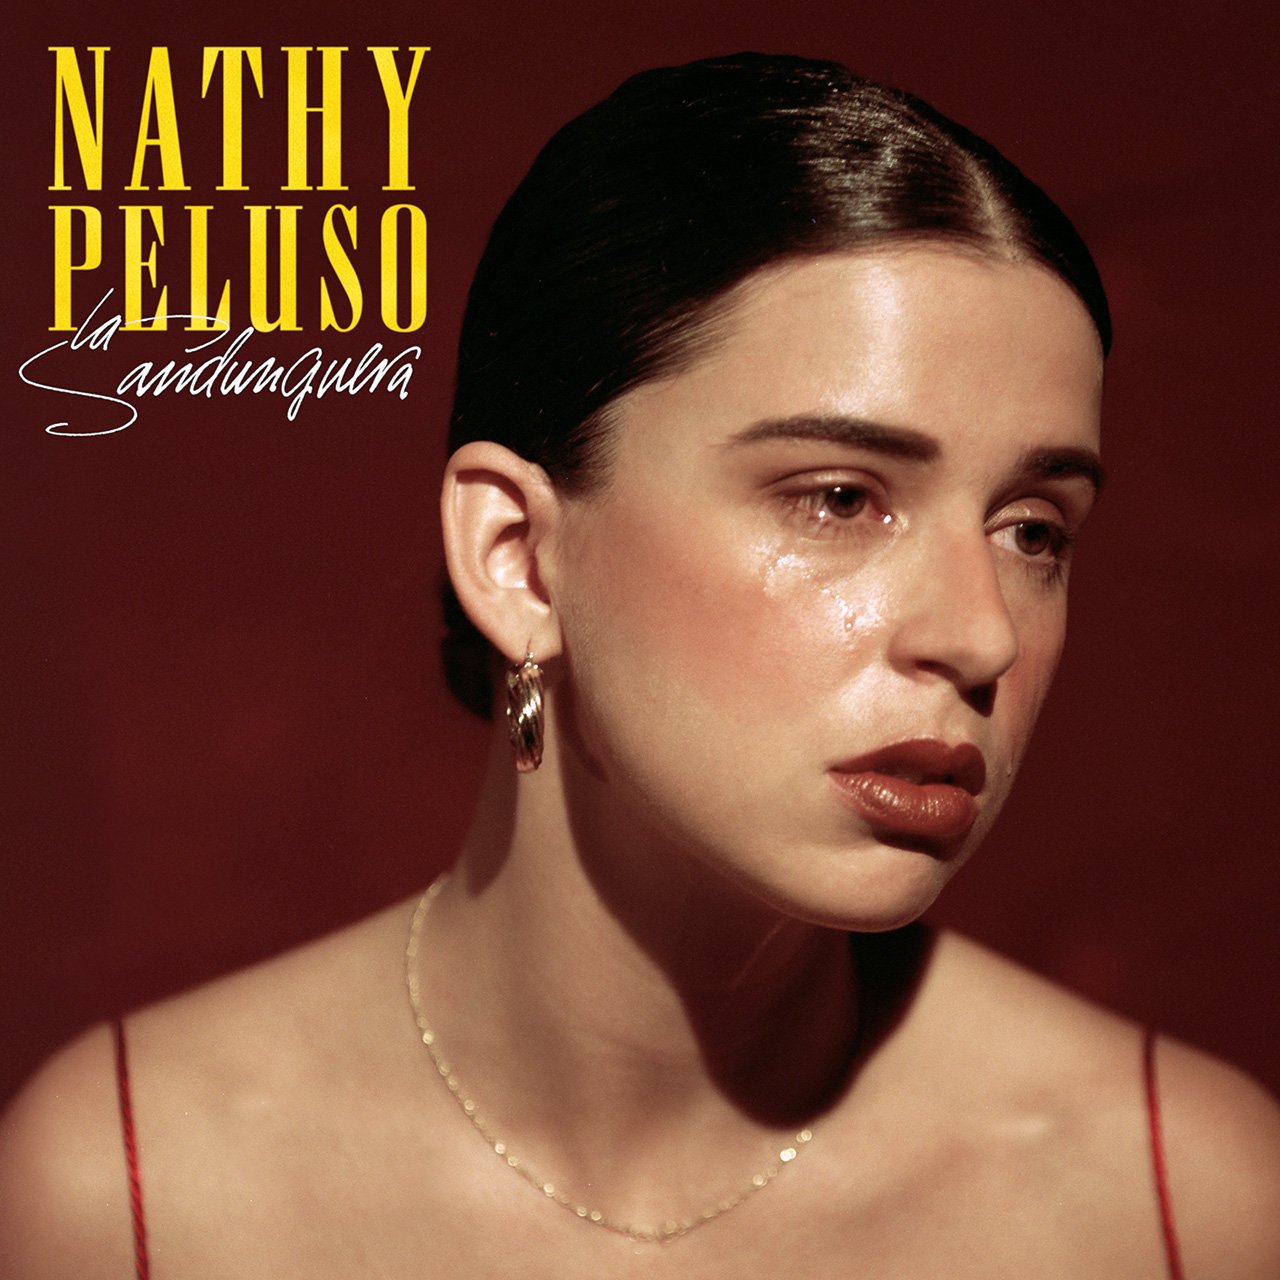 Nathy Peluso "La Sandunguera" LP